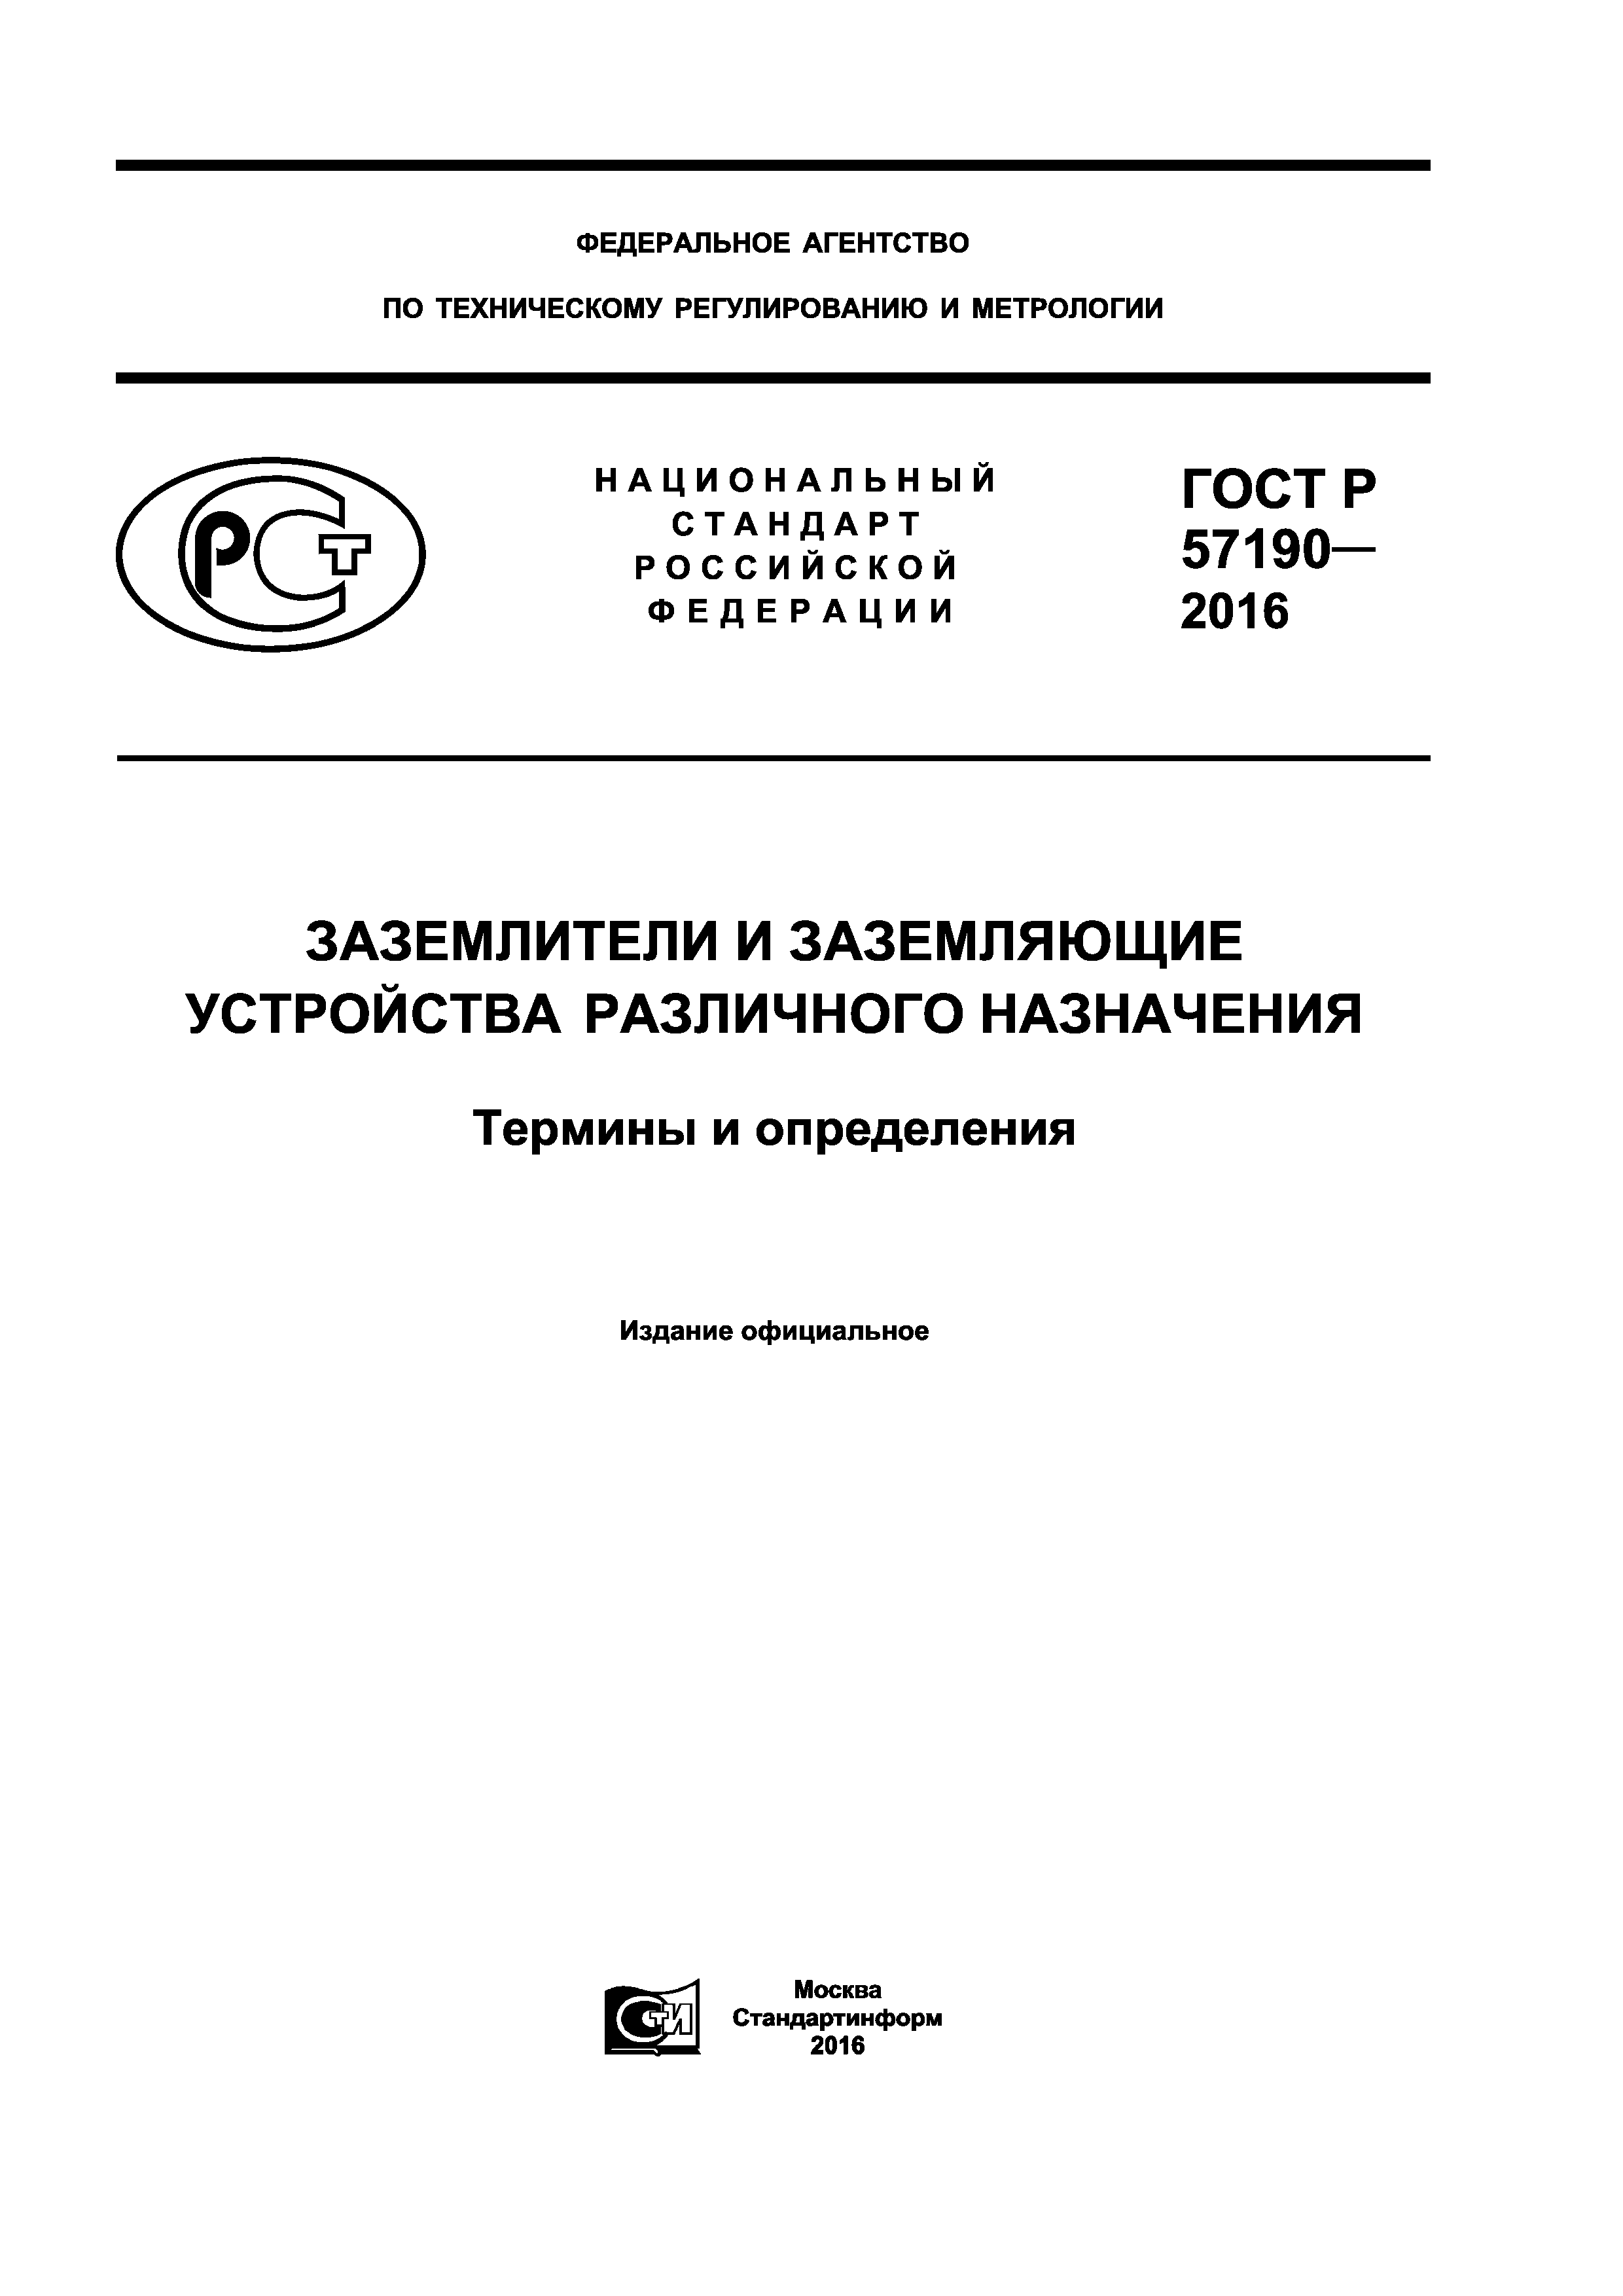 ГОСТ Р 57190-2016